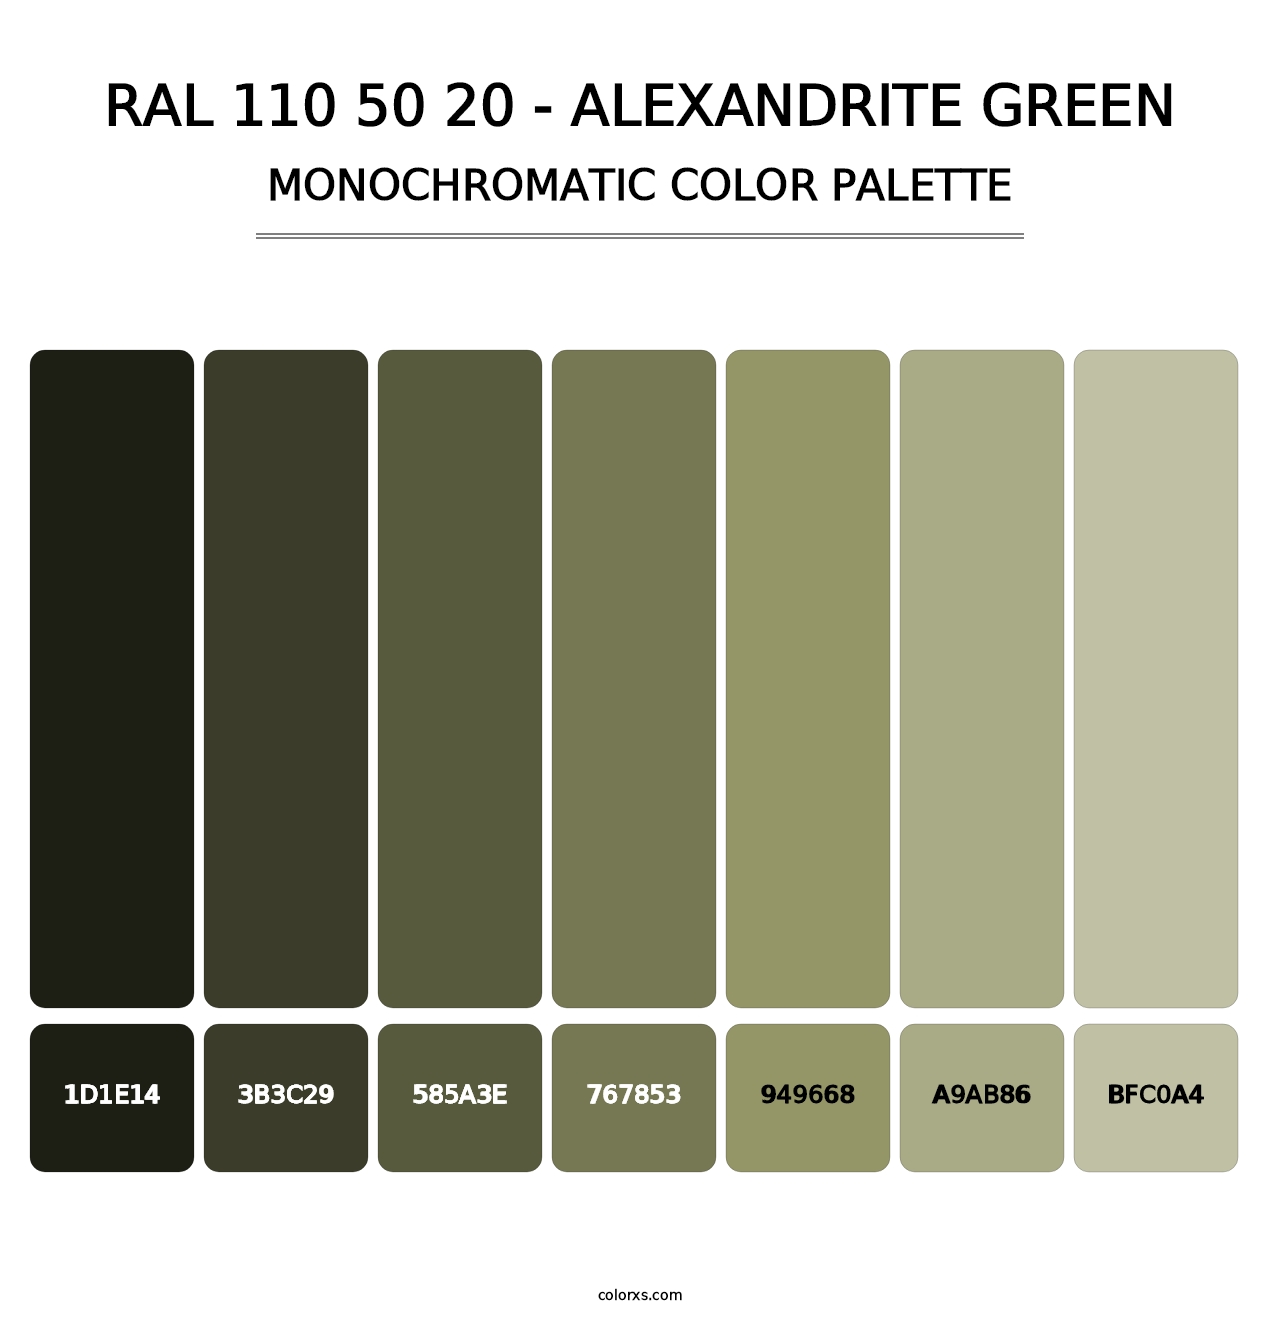 RAL 110 50 20 - Alexandrite Green - Monochromatic Color Palette